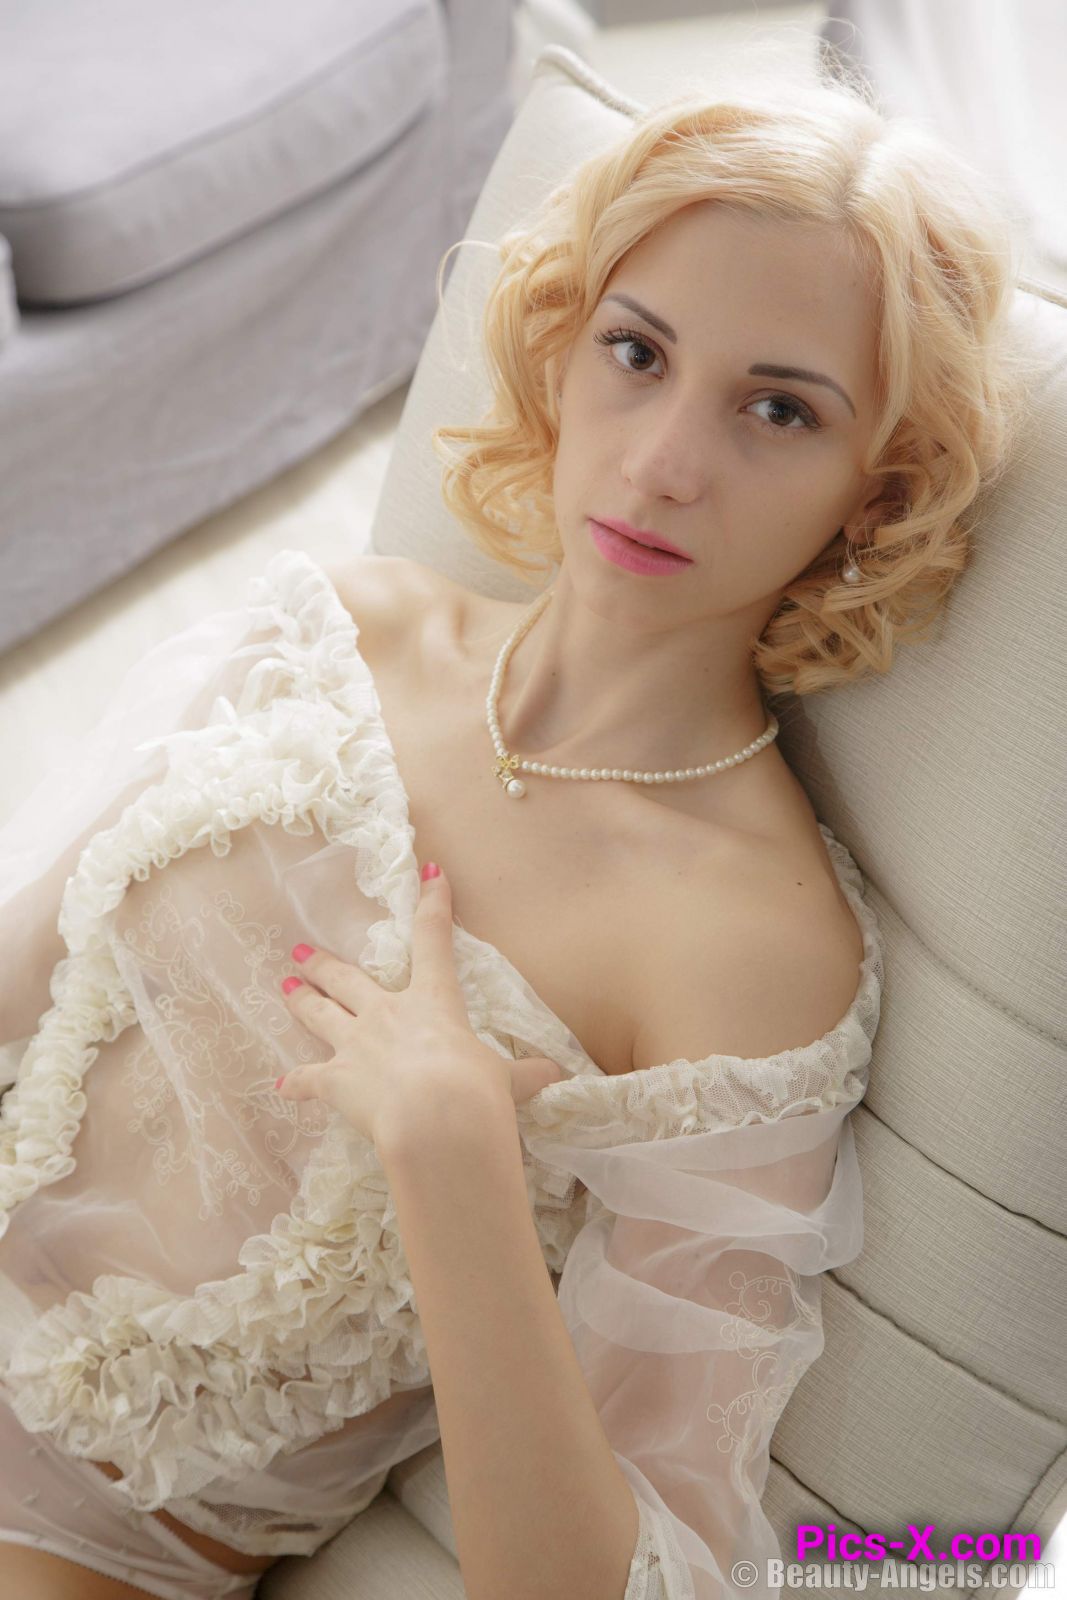 Lithe Blonde Solo - Beauty-Angels.com - Image 55